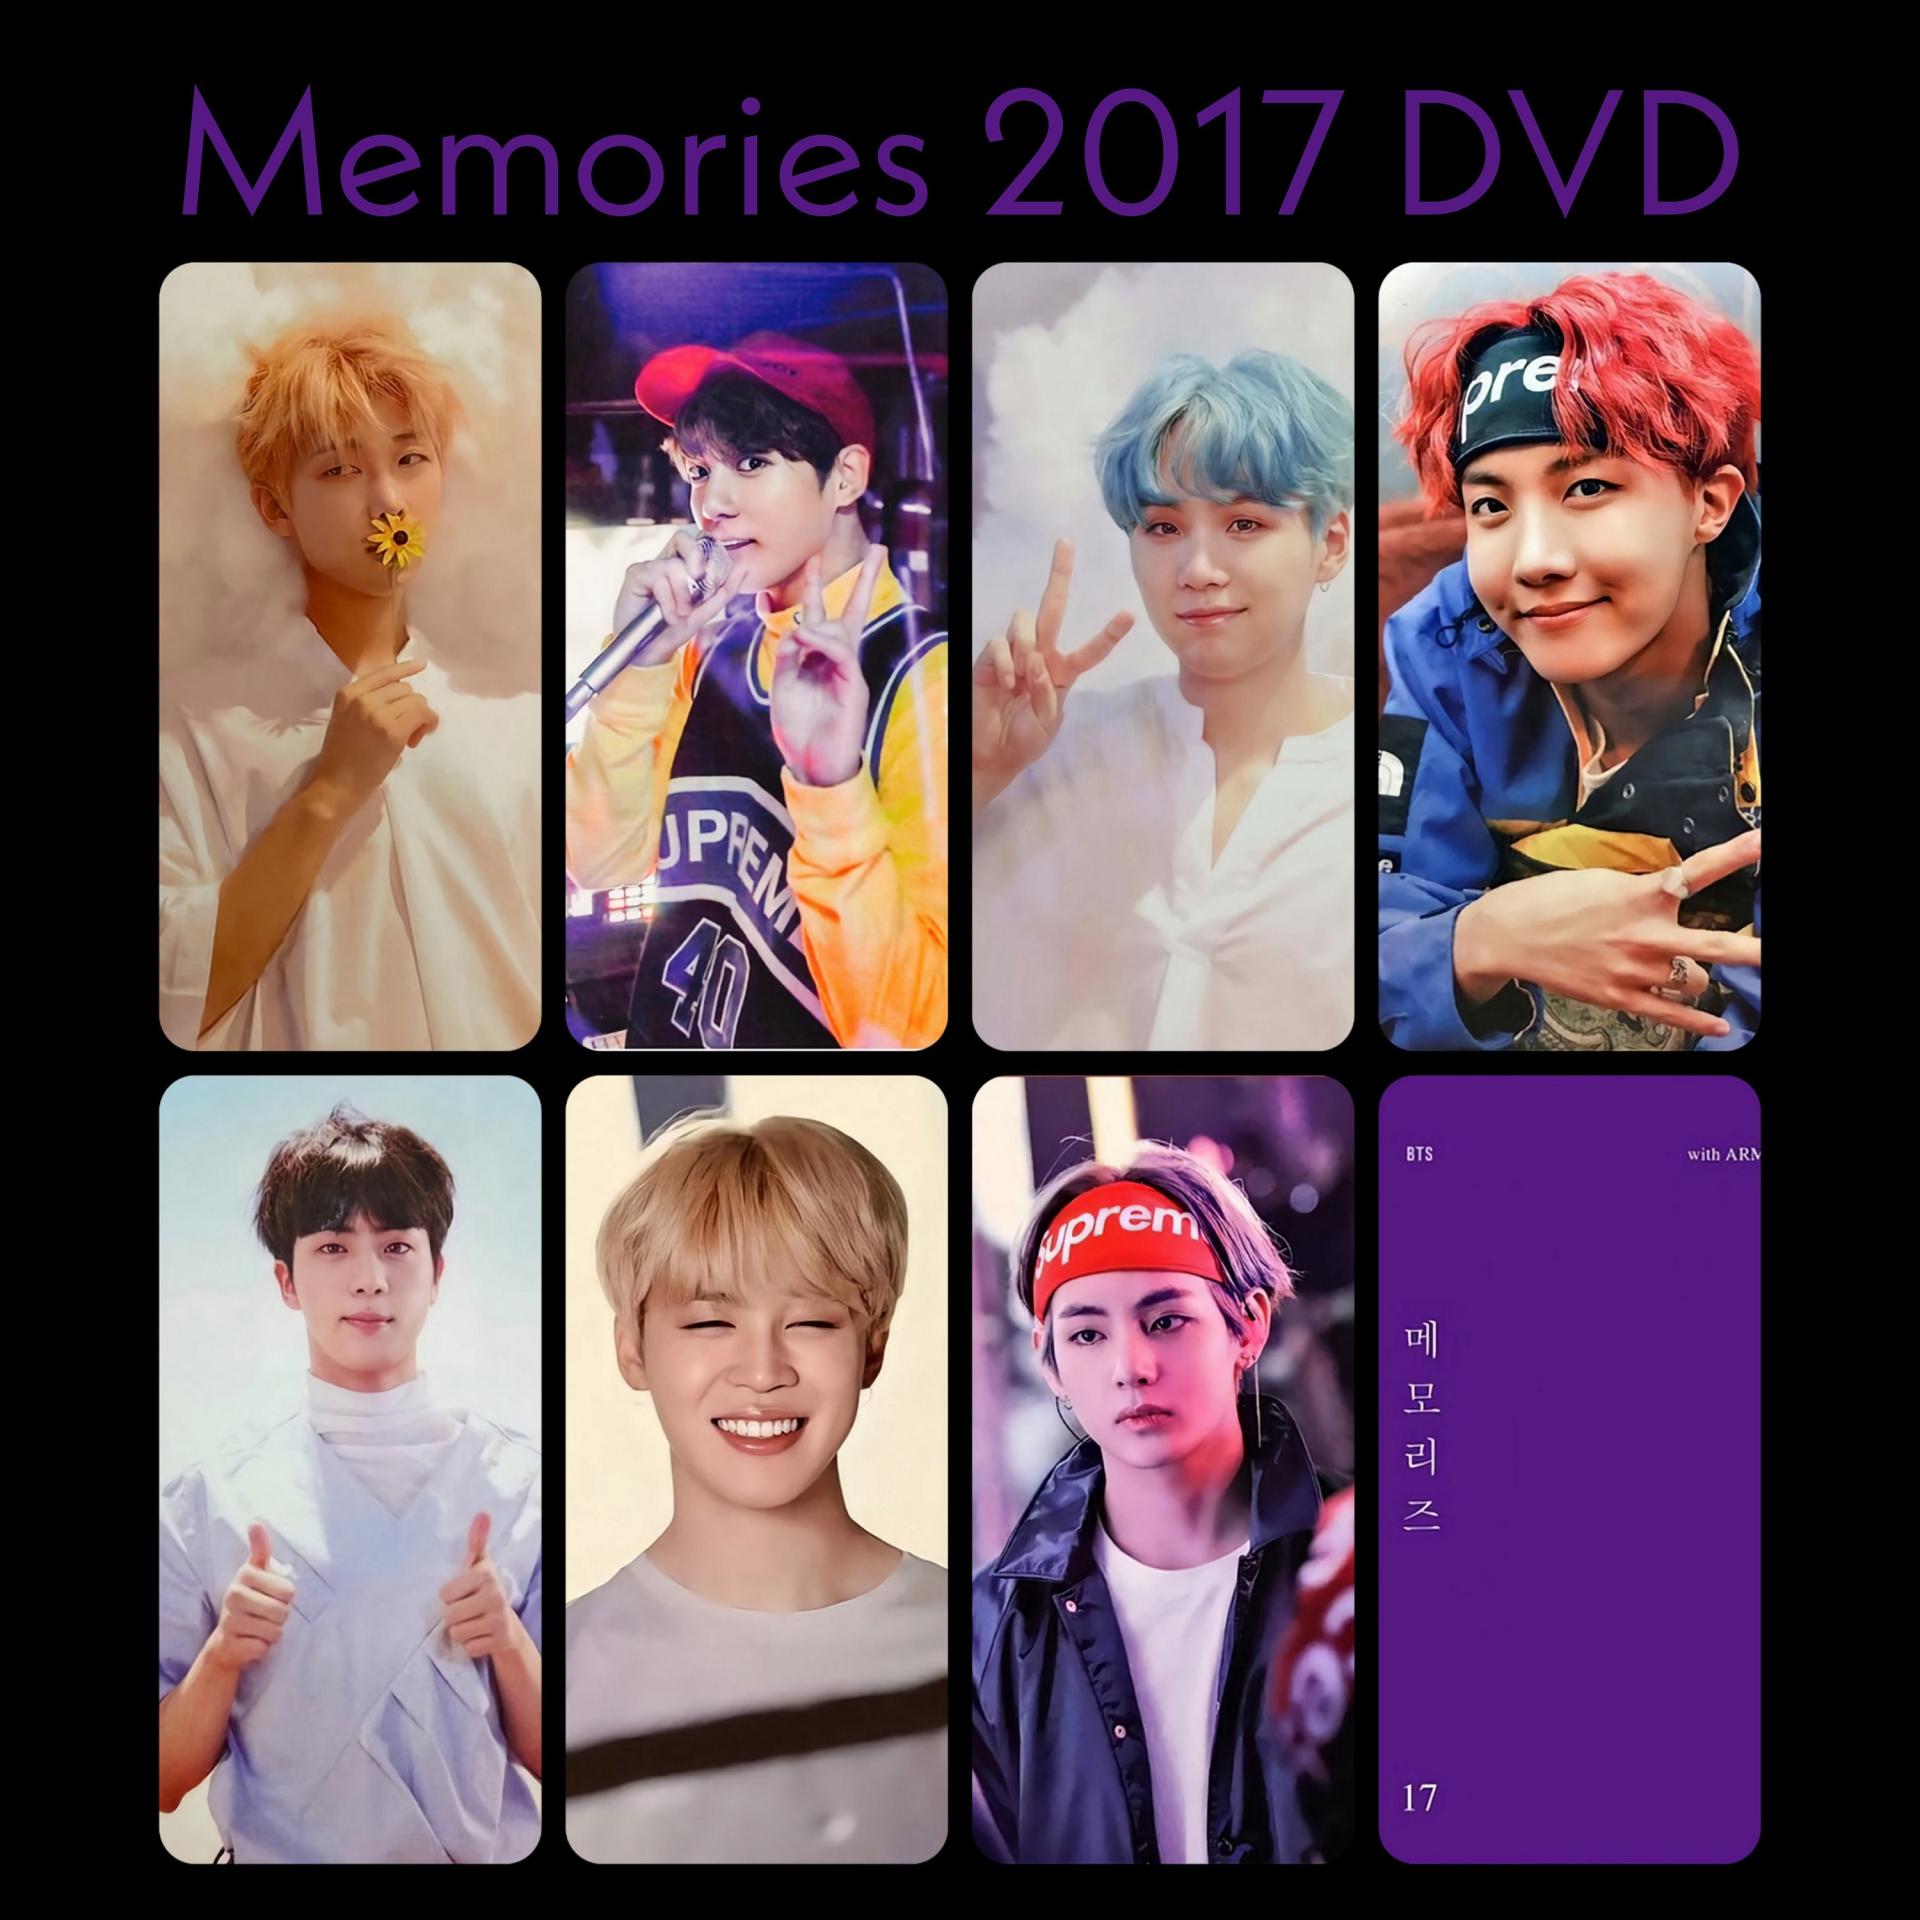 BTS Memories of 2017 DVD Photo Cards